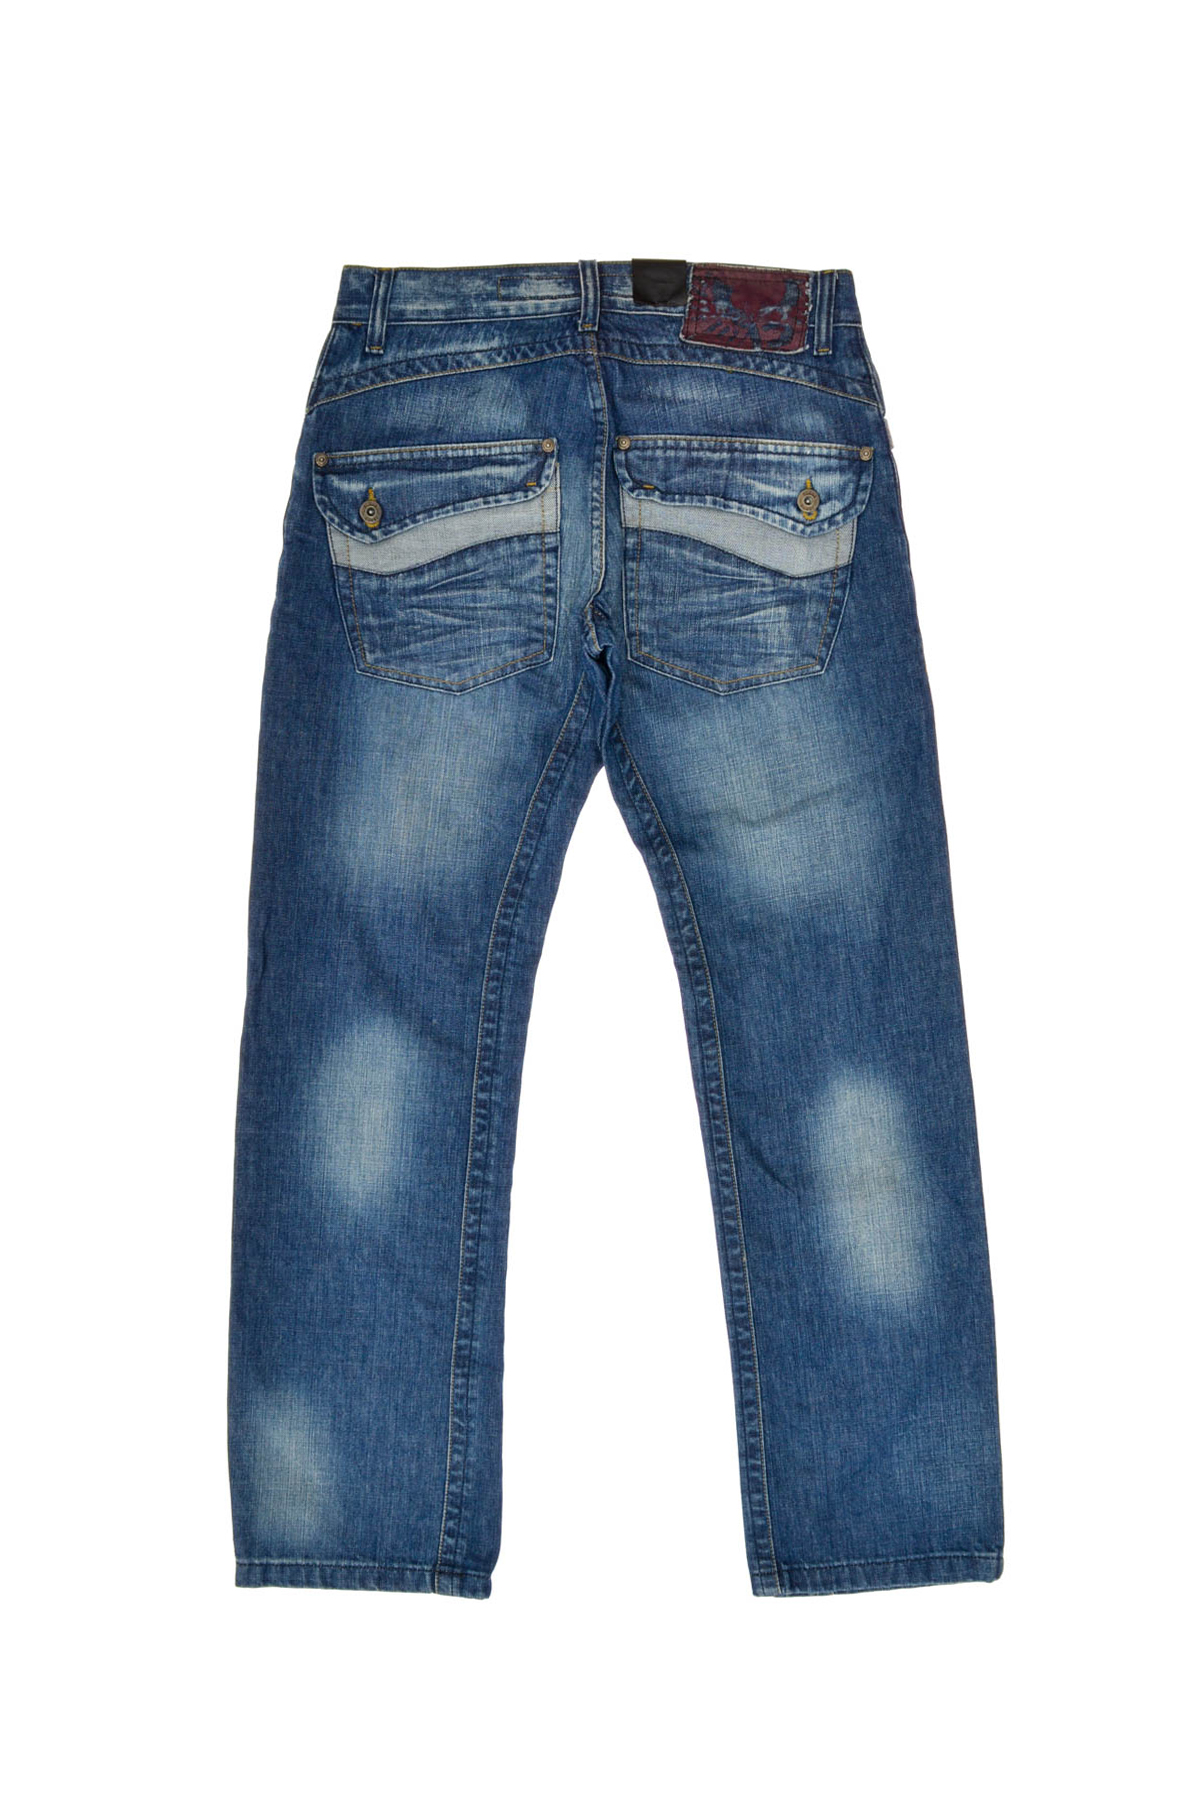 Men's jeans - BLEND DENIM - 1